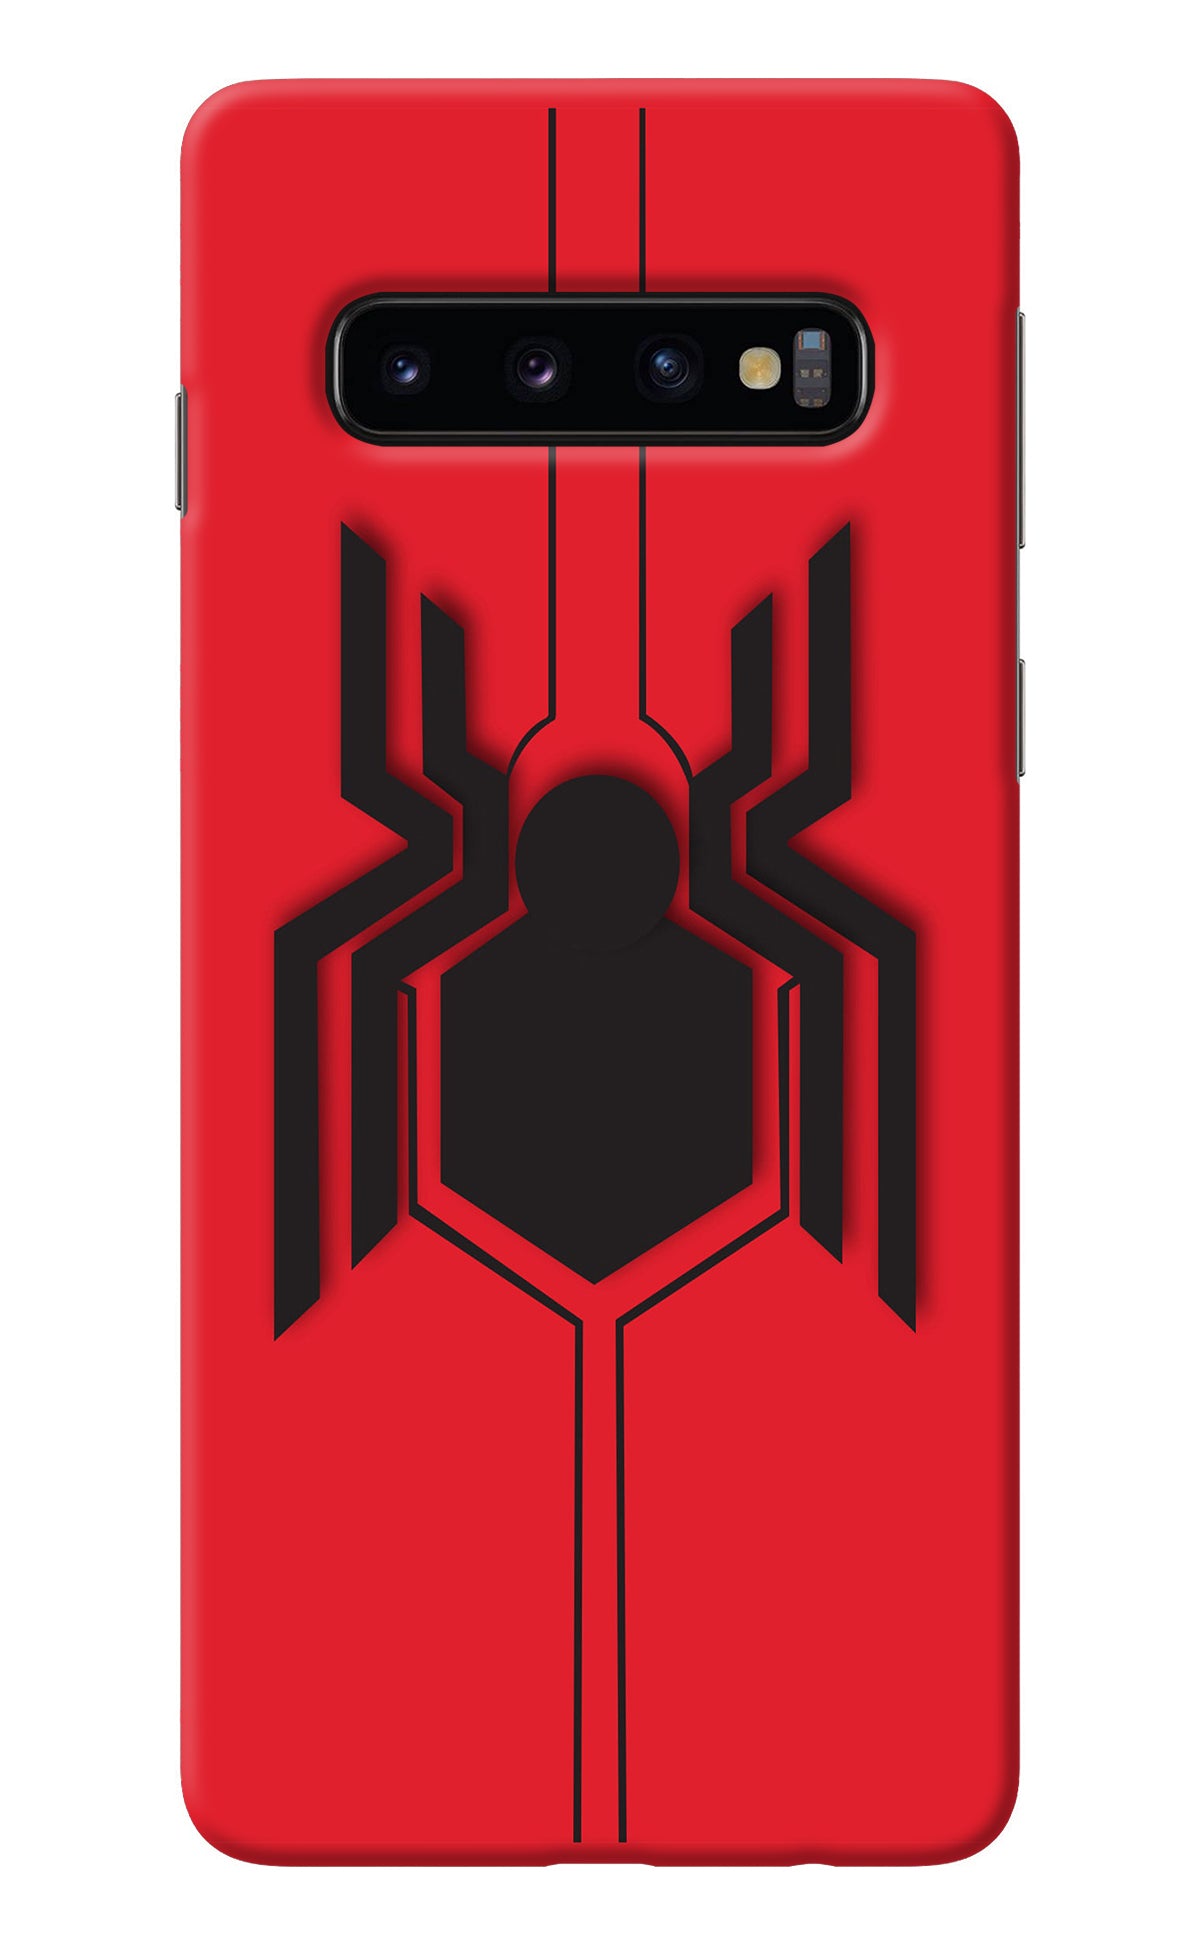 Spider Samsung S10 Back Cover